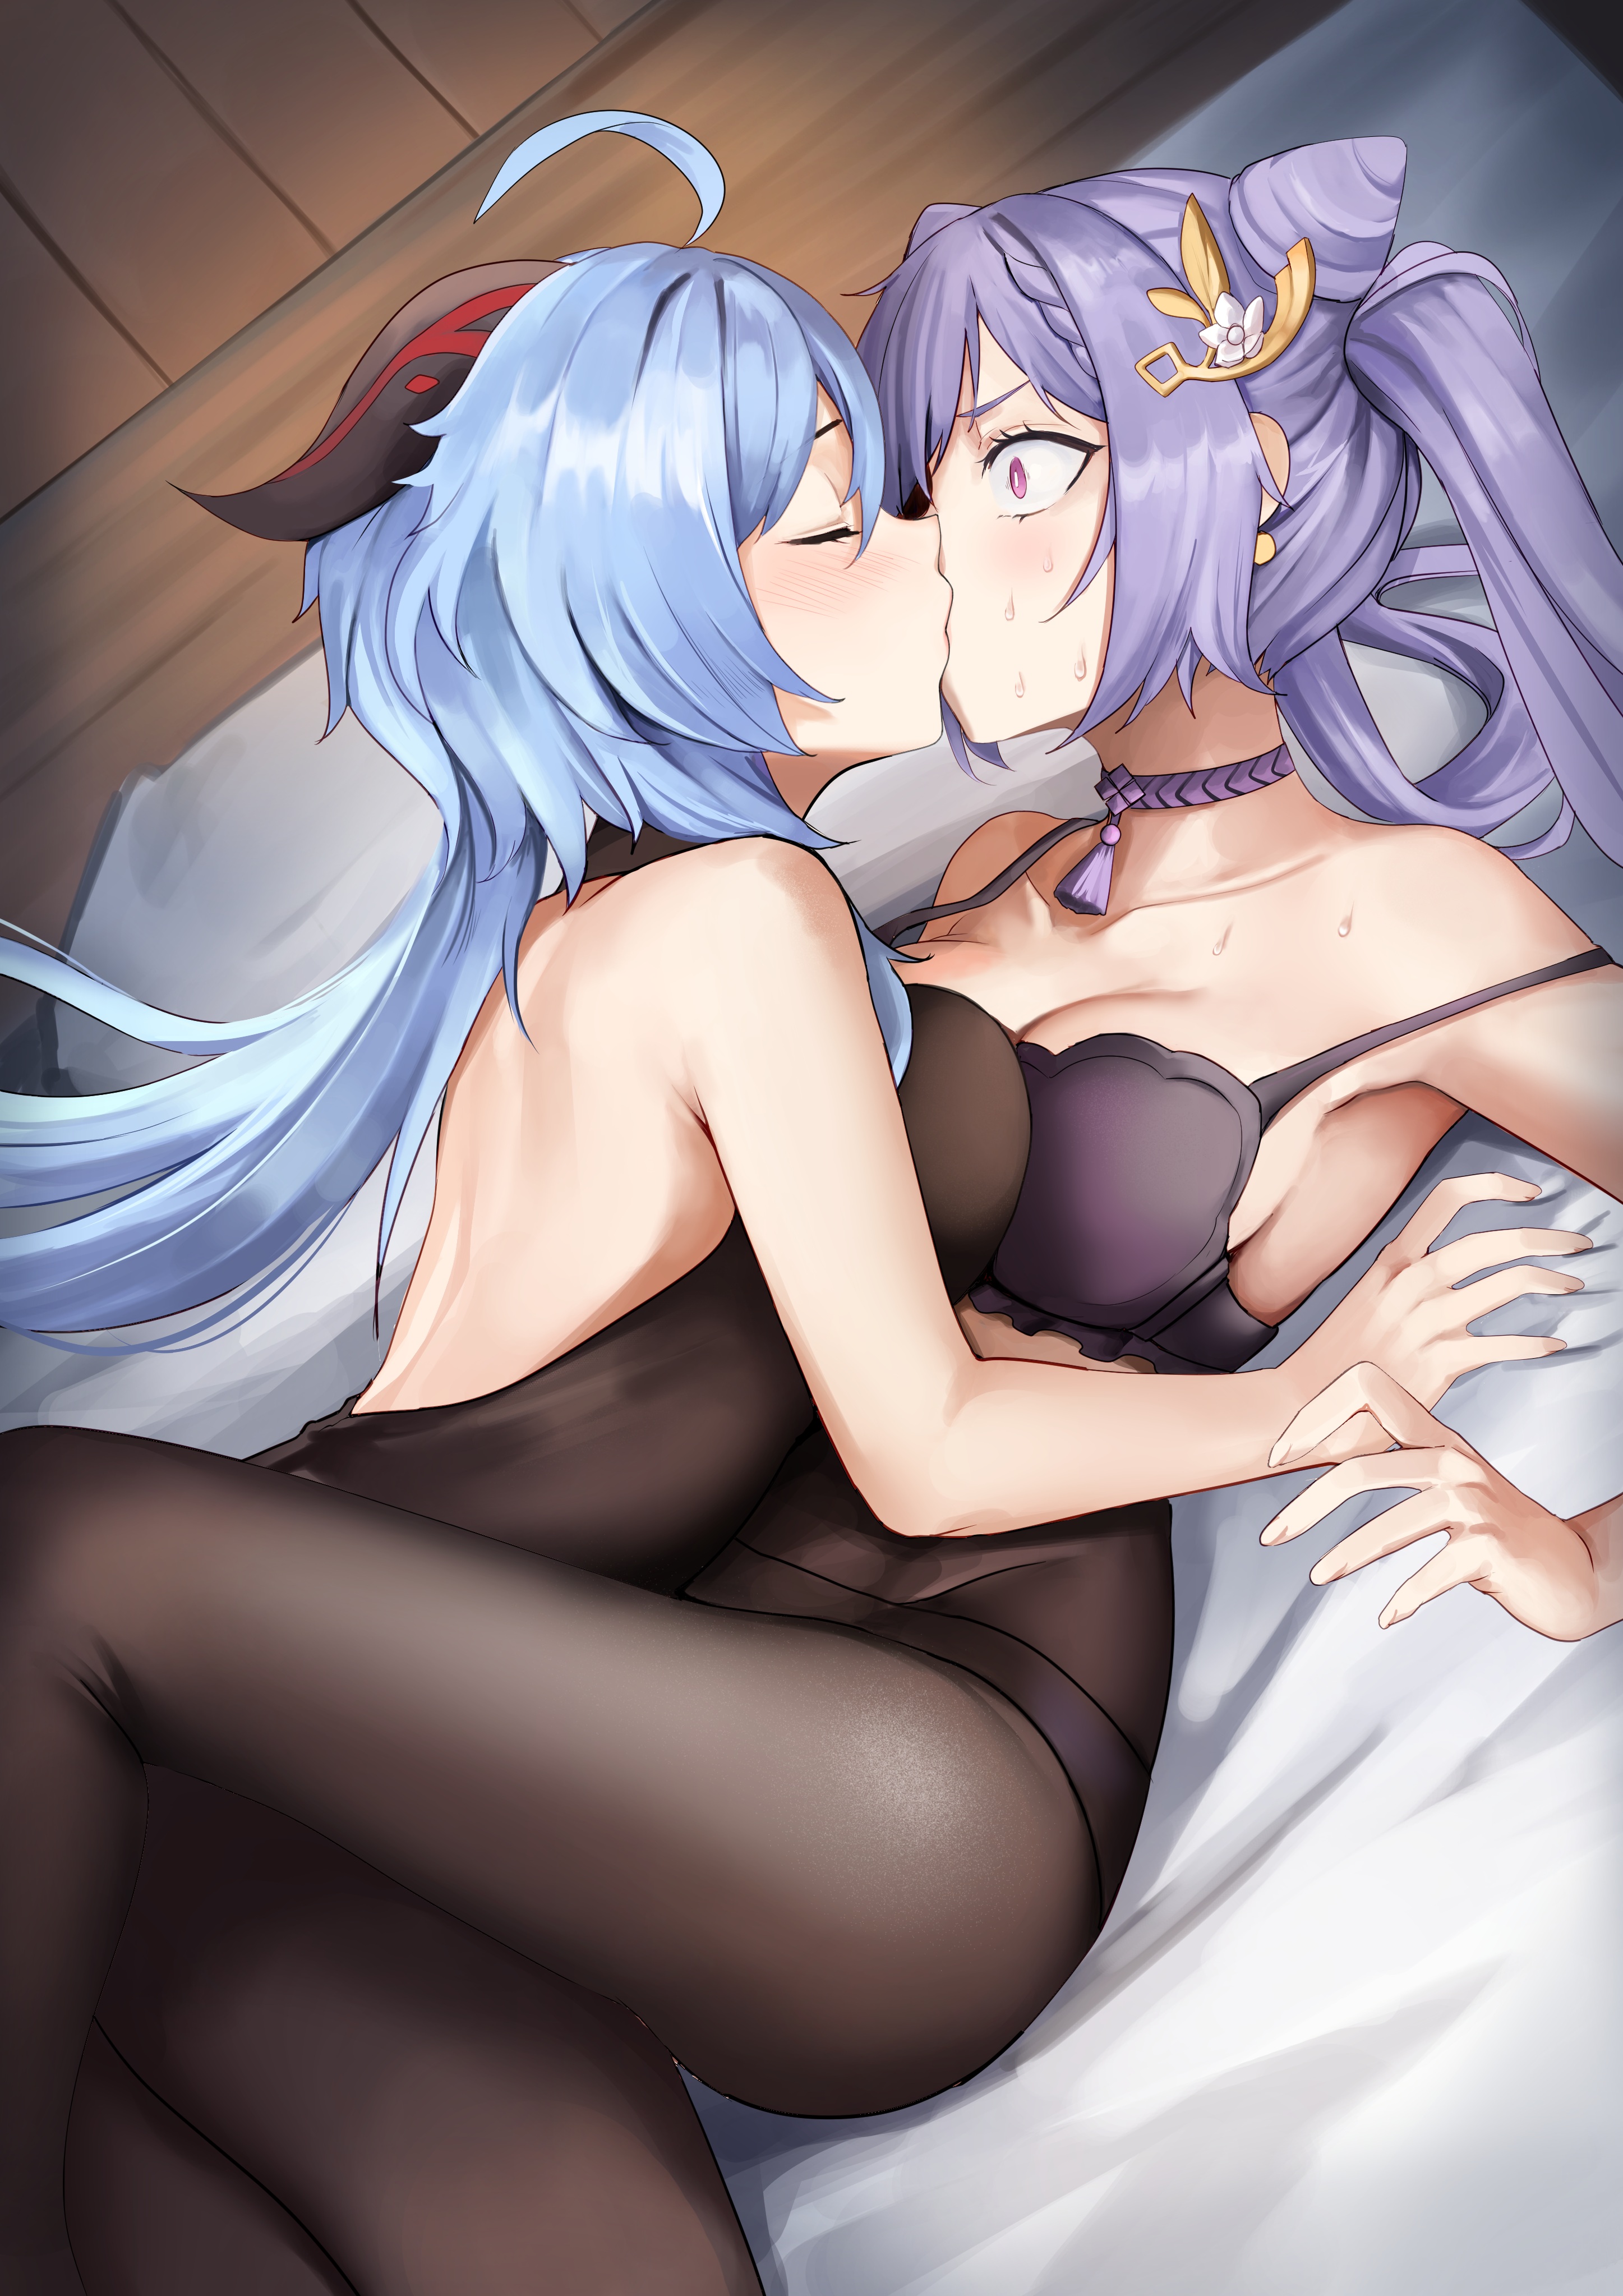 Anime 2894x4093 anime girls kissing in bed bodystocking underwear